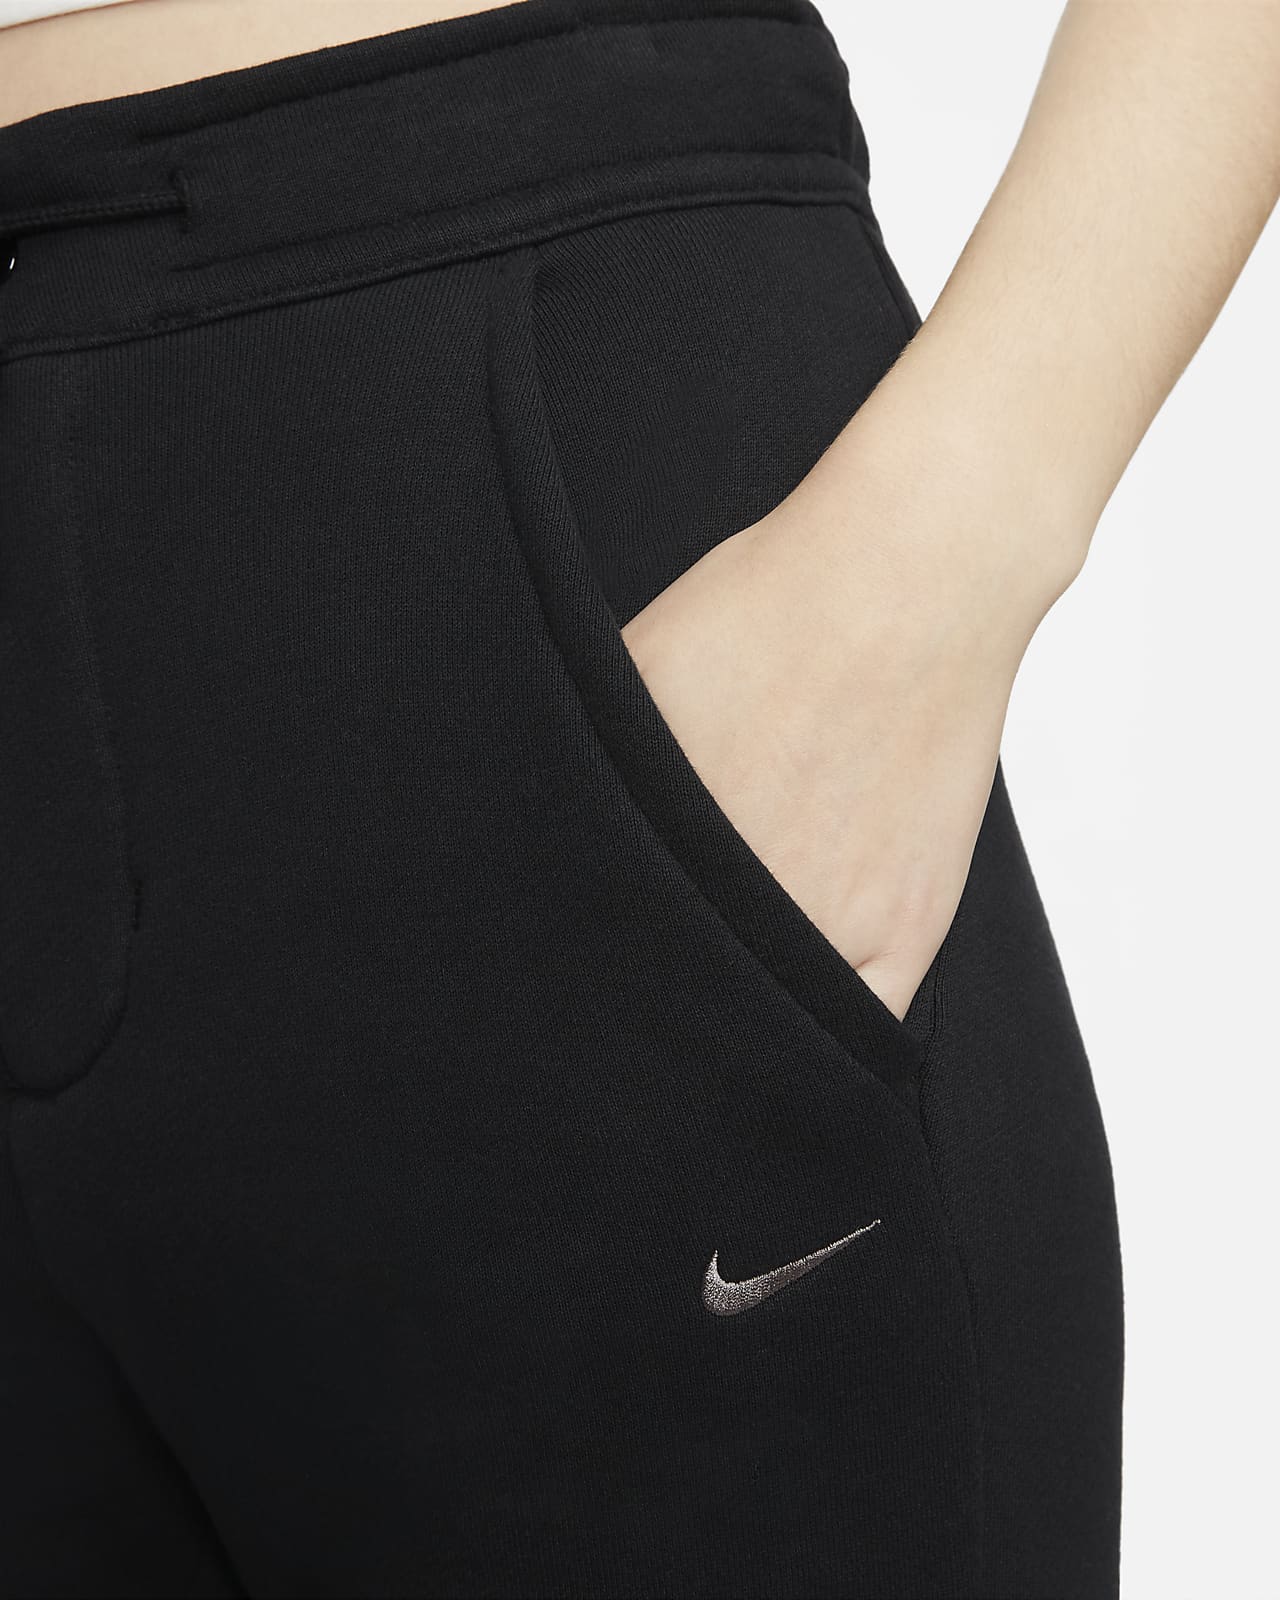 Nike Sportswear Modern Fleece Women's High-Waisted French Terry Pants. Nike